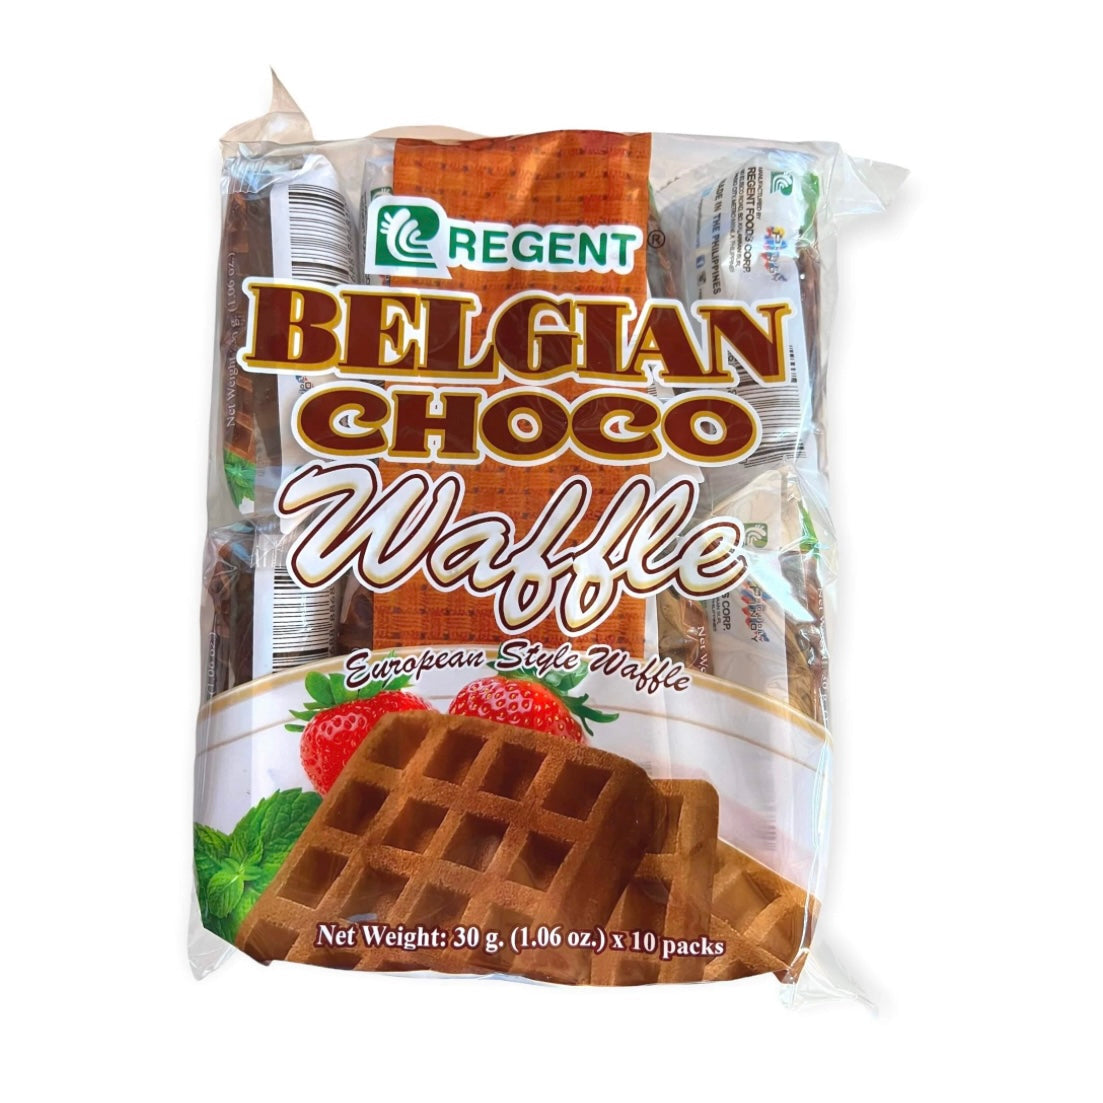 Regent Belgian Choco Waffle